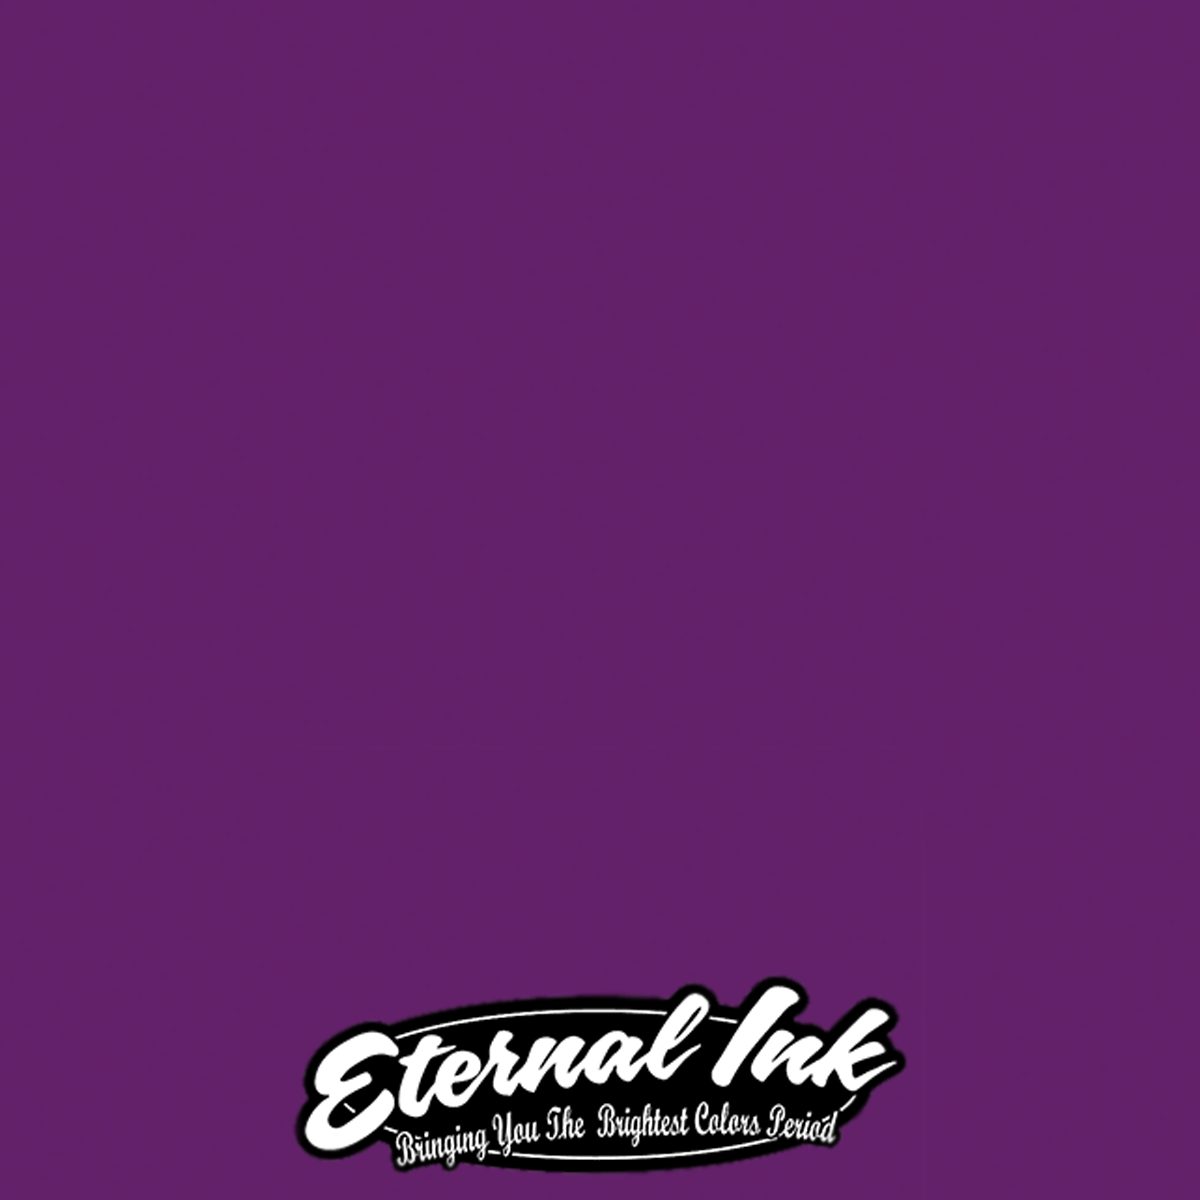 Pigmento ETERNAL Purple